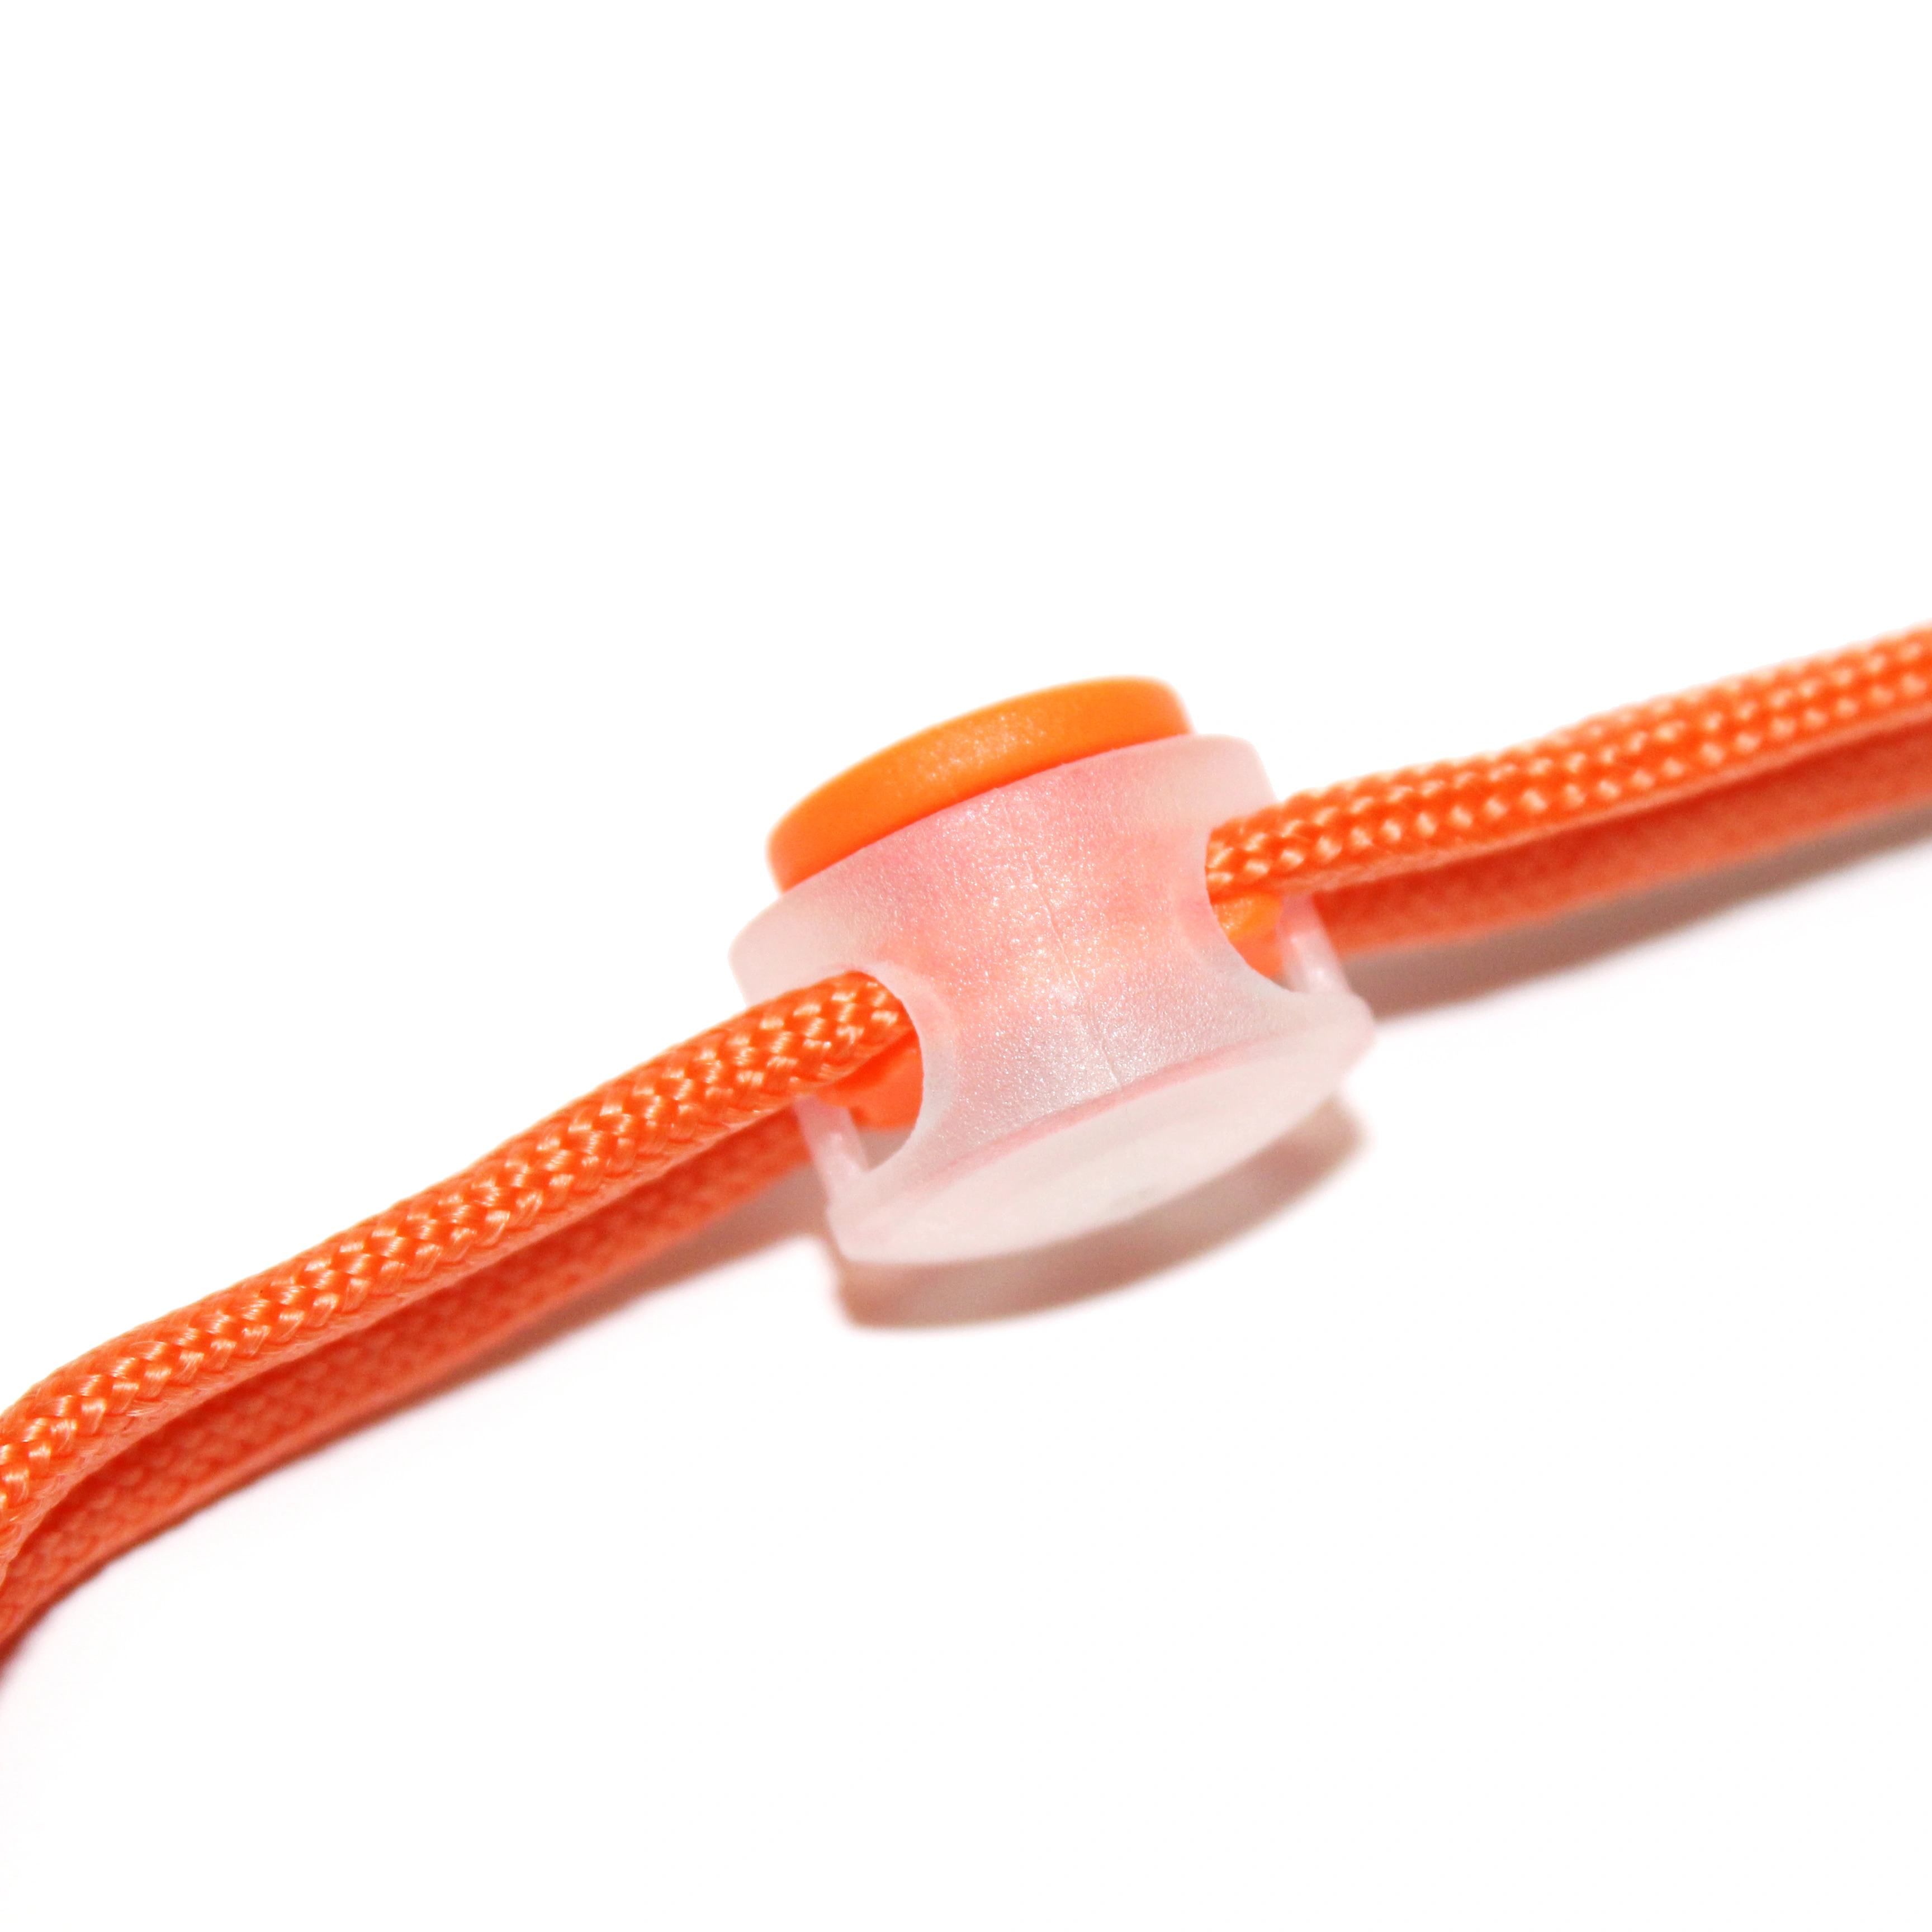 elastic eyeglass straps